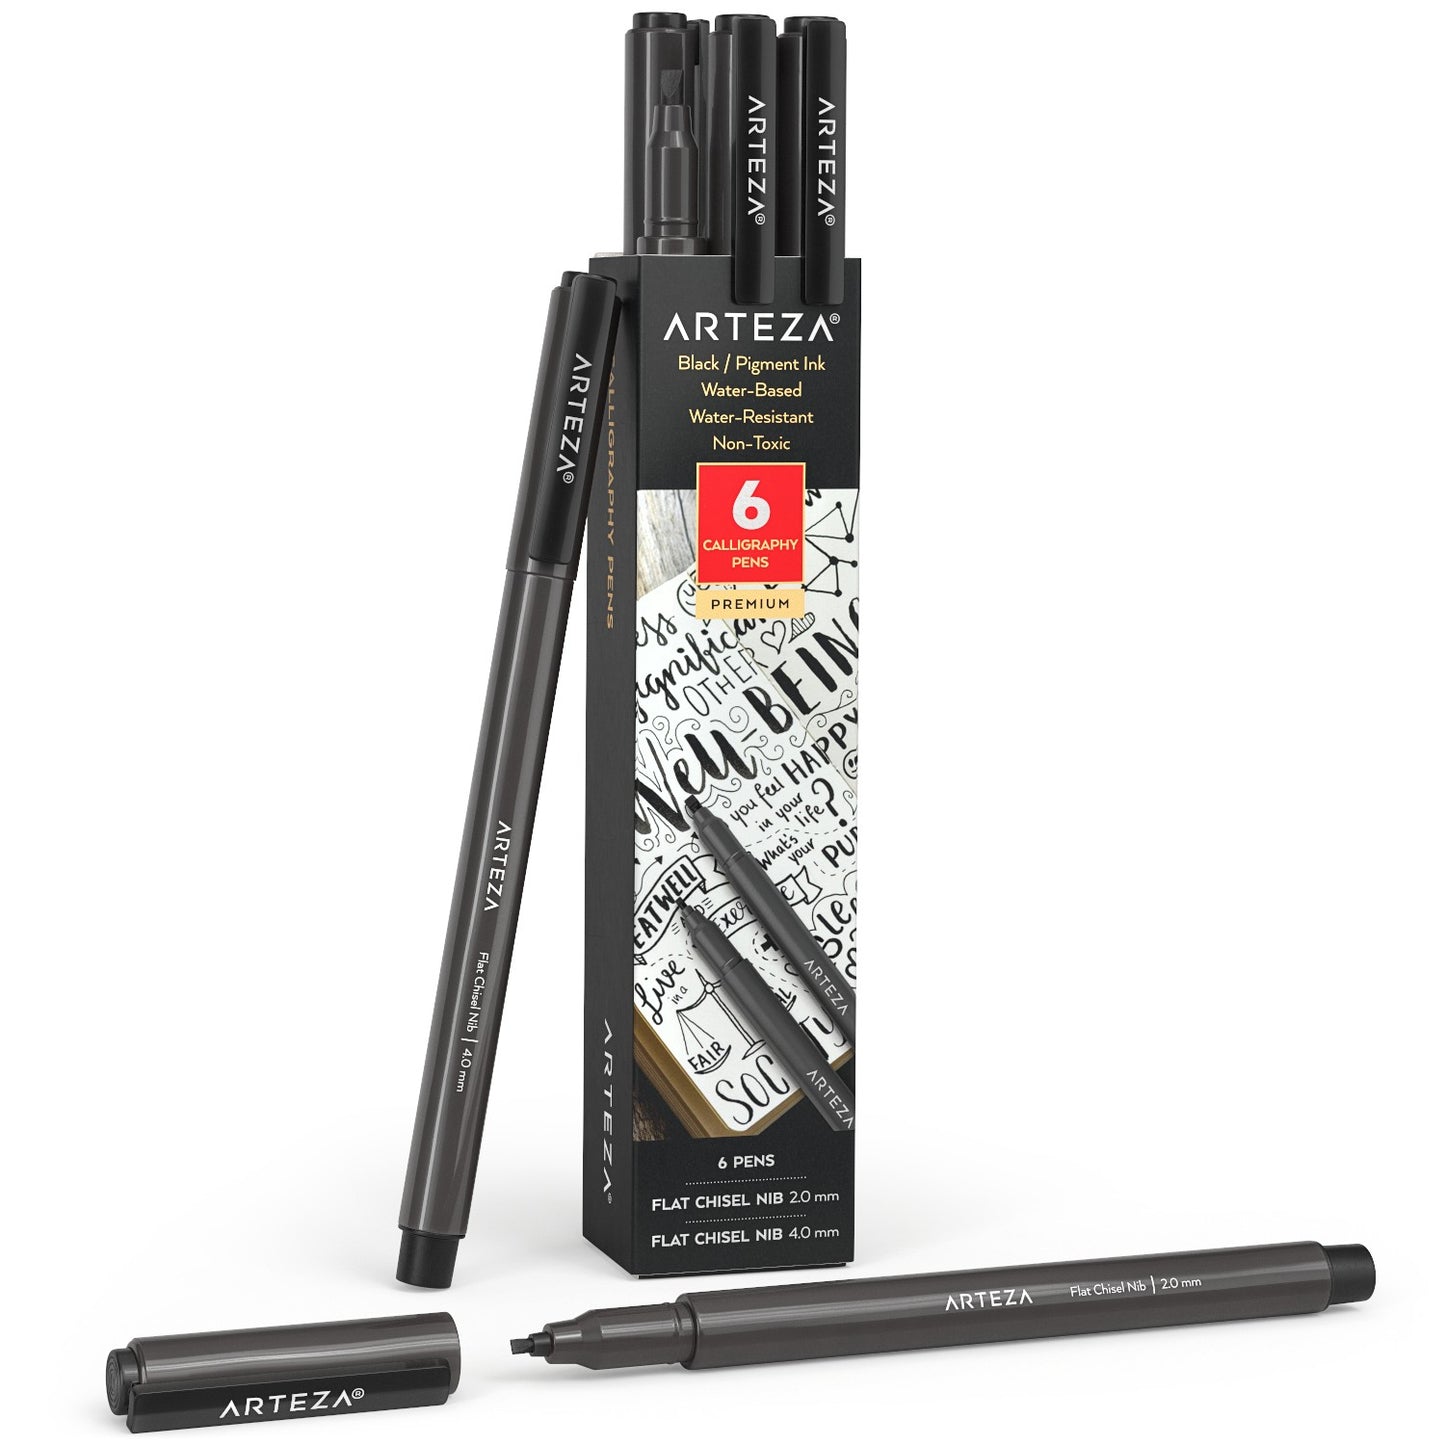 Arteza Calligraphy Pen, Black Pigment Ink, Flat Chisel Nib  Set of 6